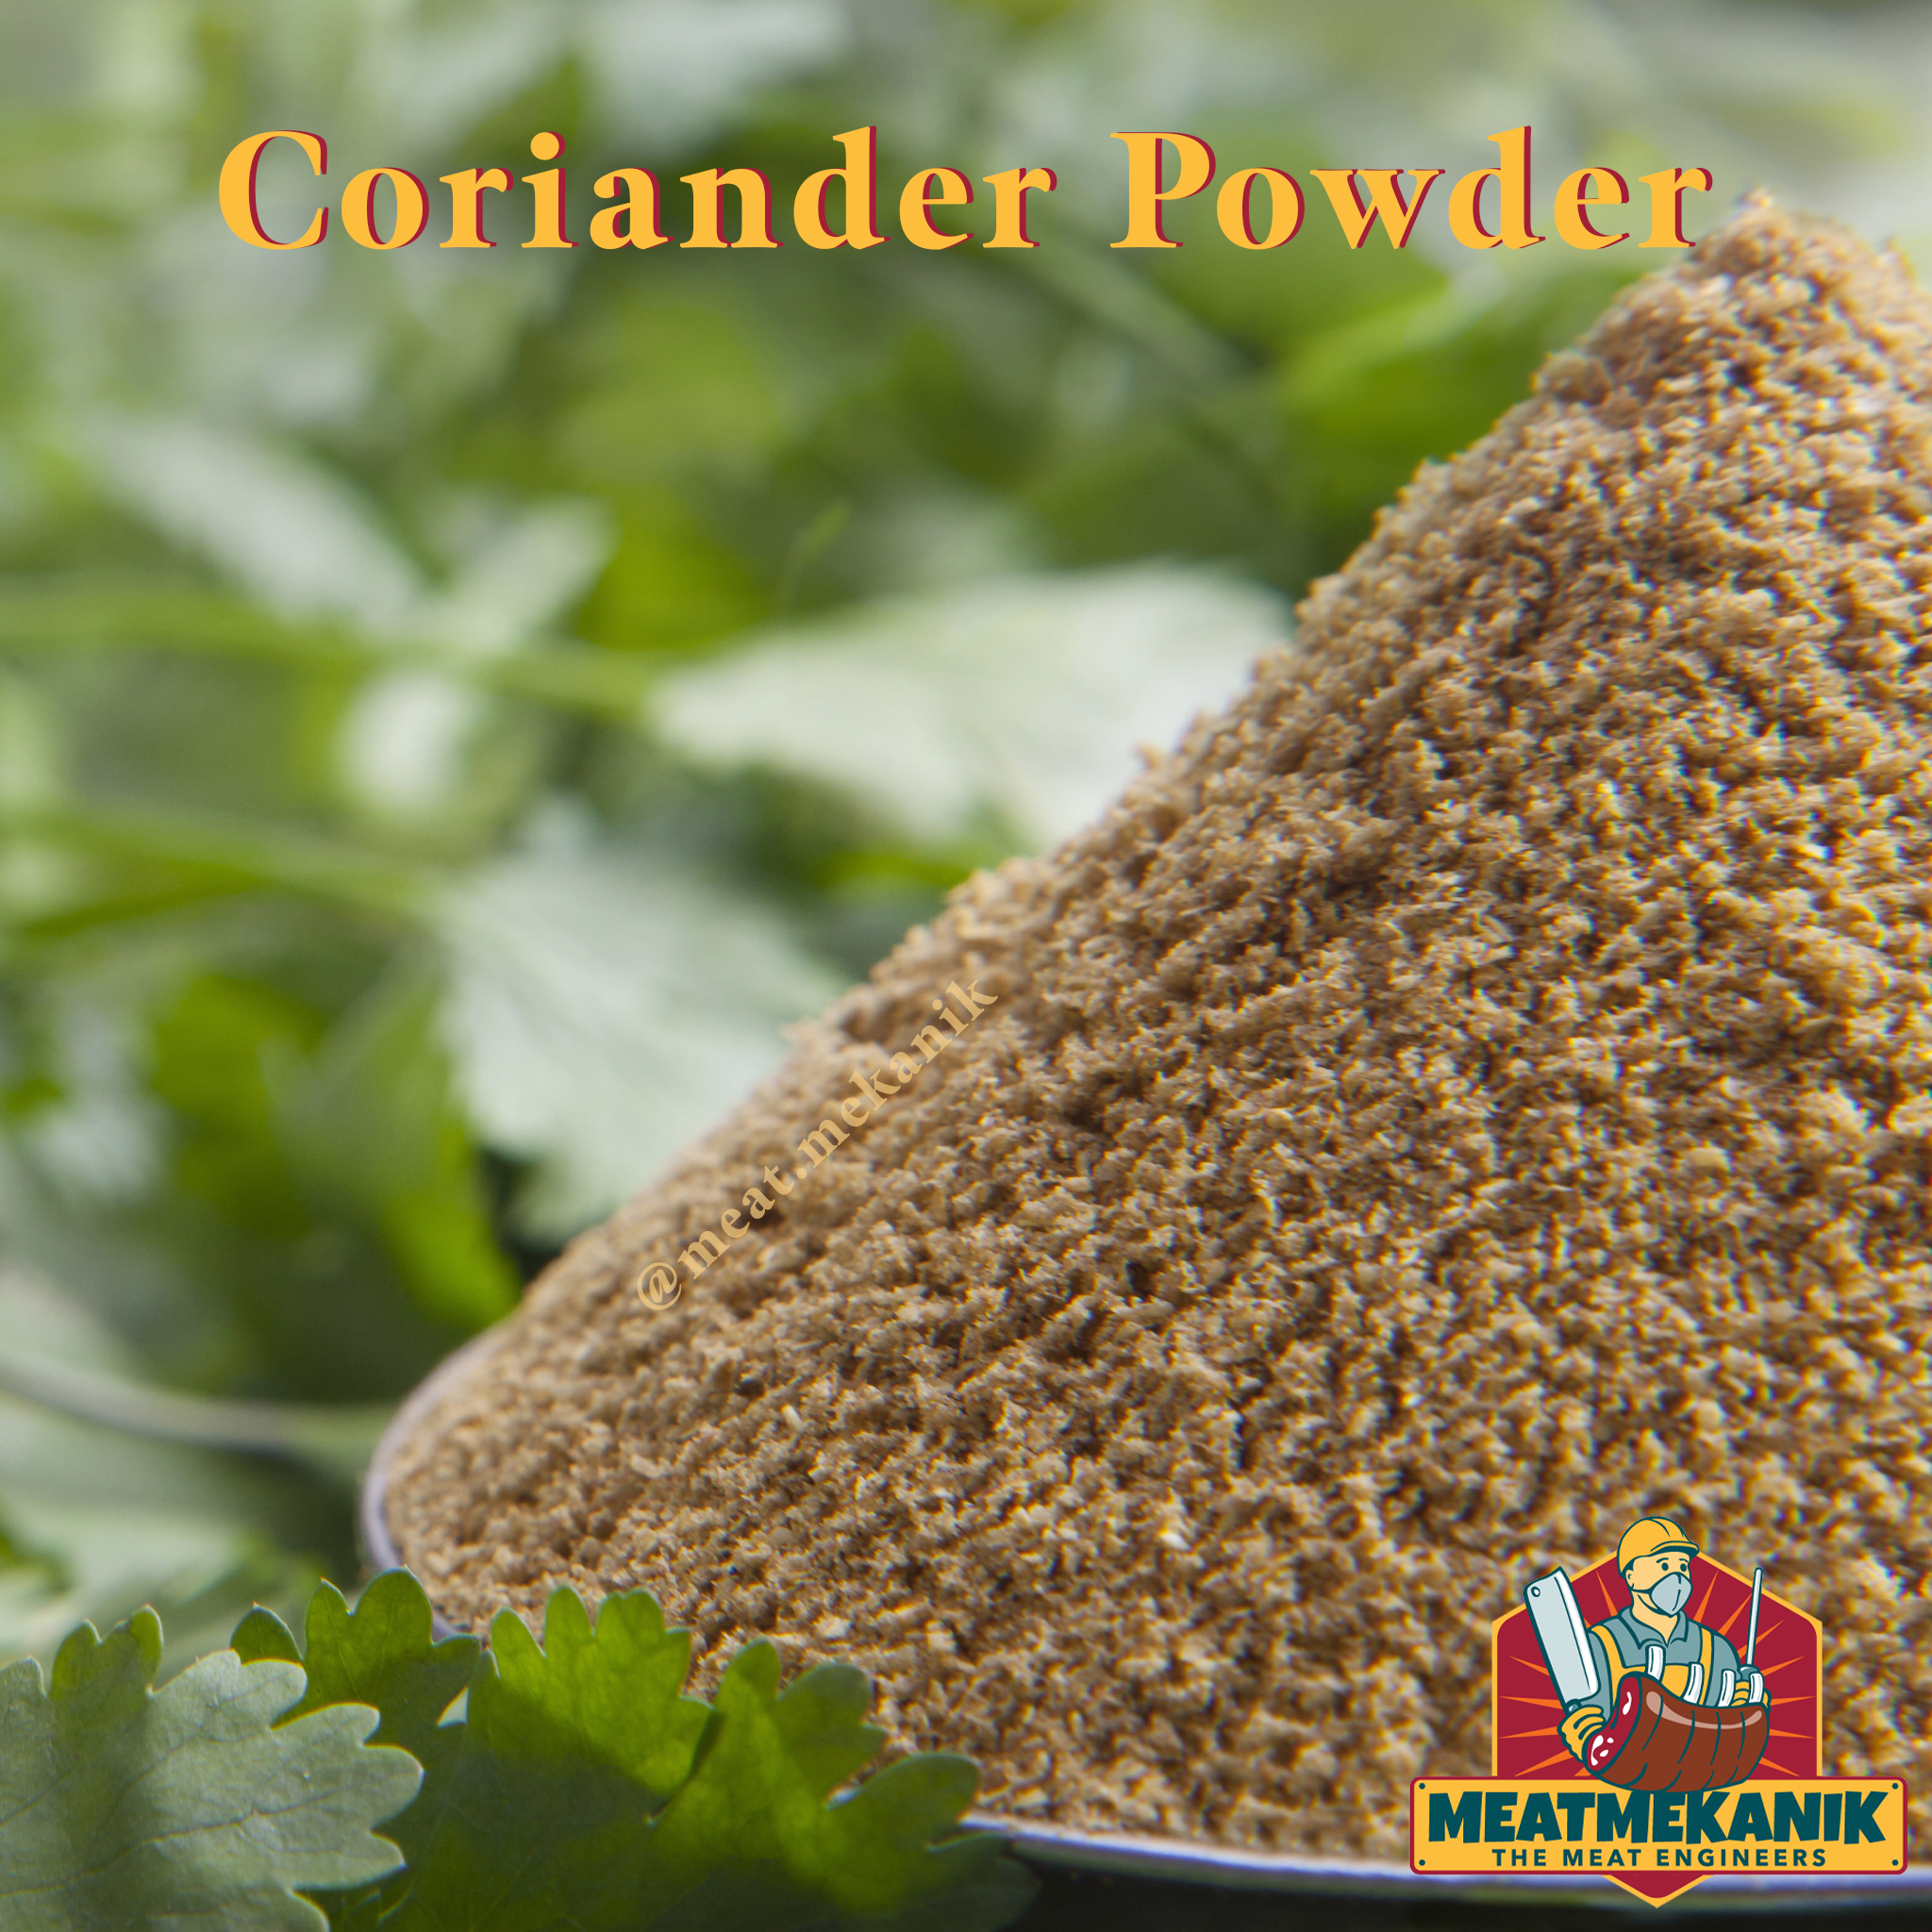 Coriander Powder - Meat Mekanik